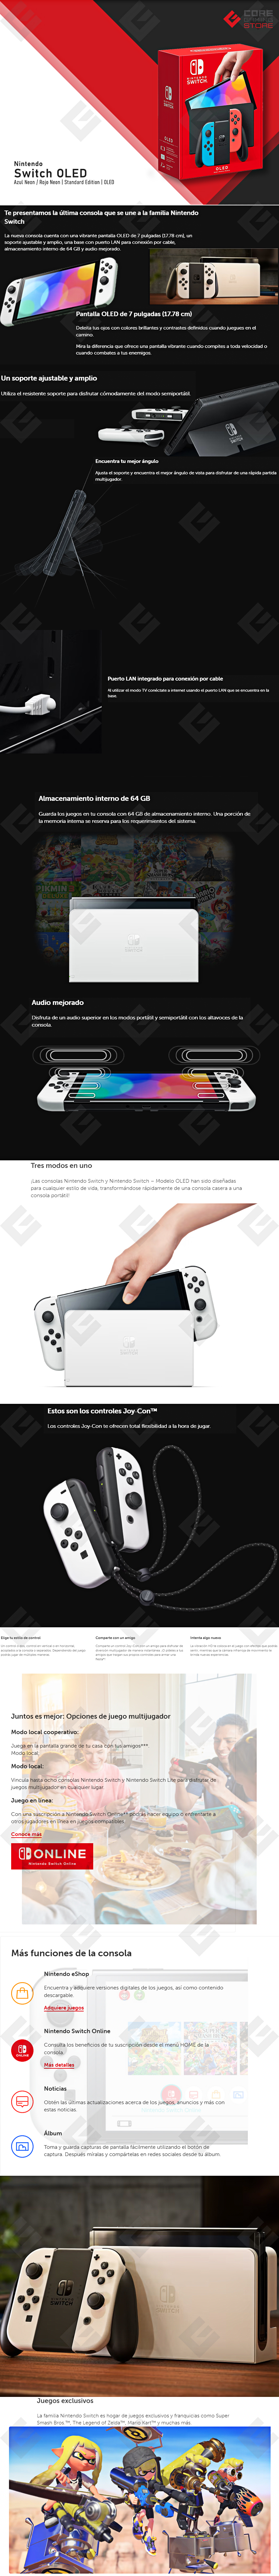 Consola Nintendo Switch Modelo OLED Roja ( Edición Mario) - Versus Gamers